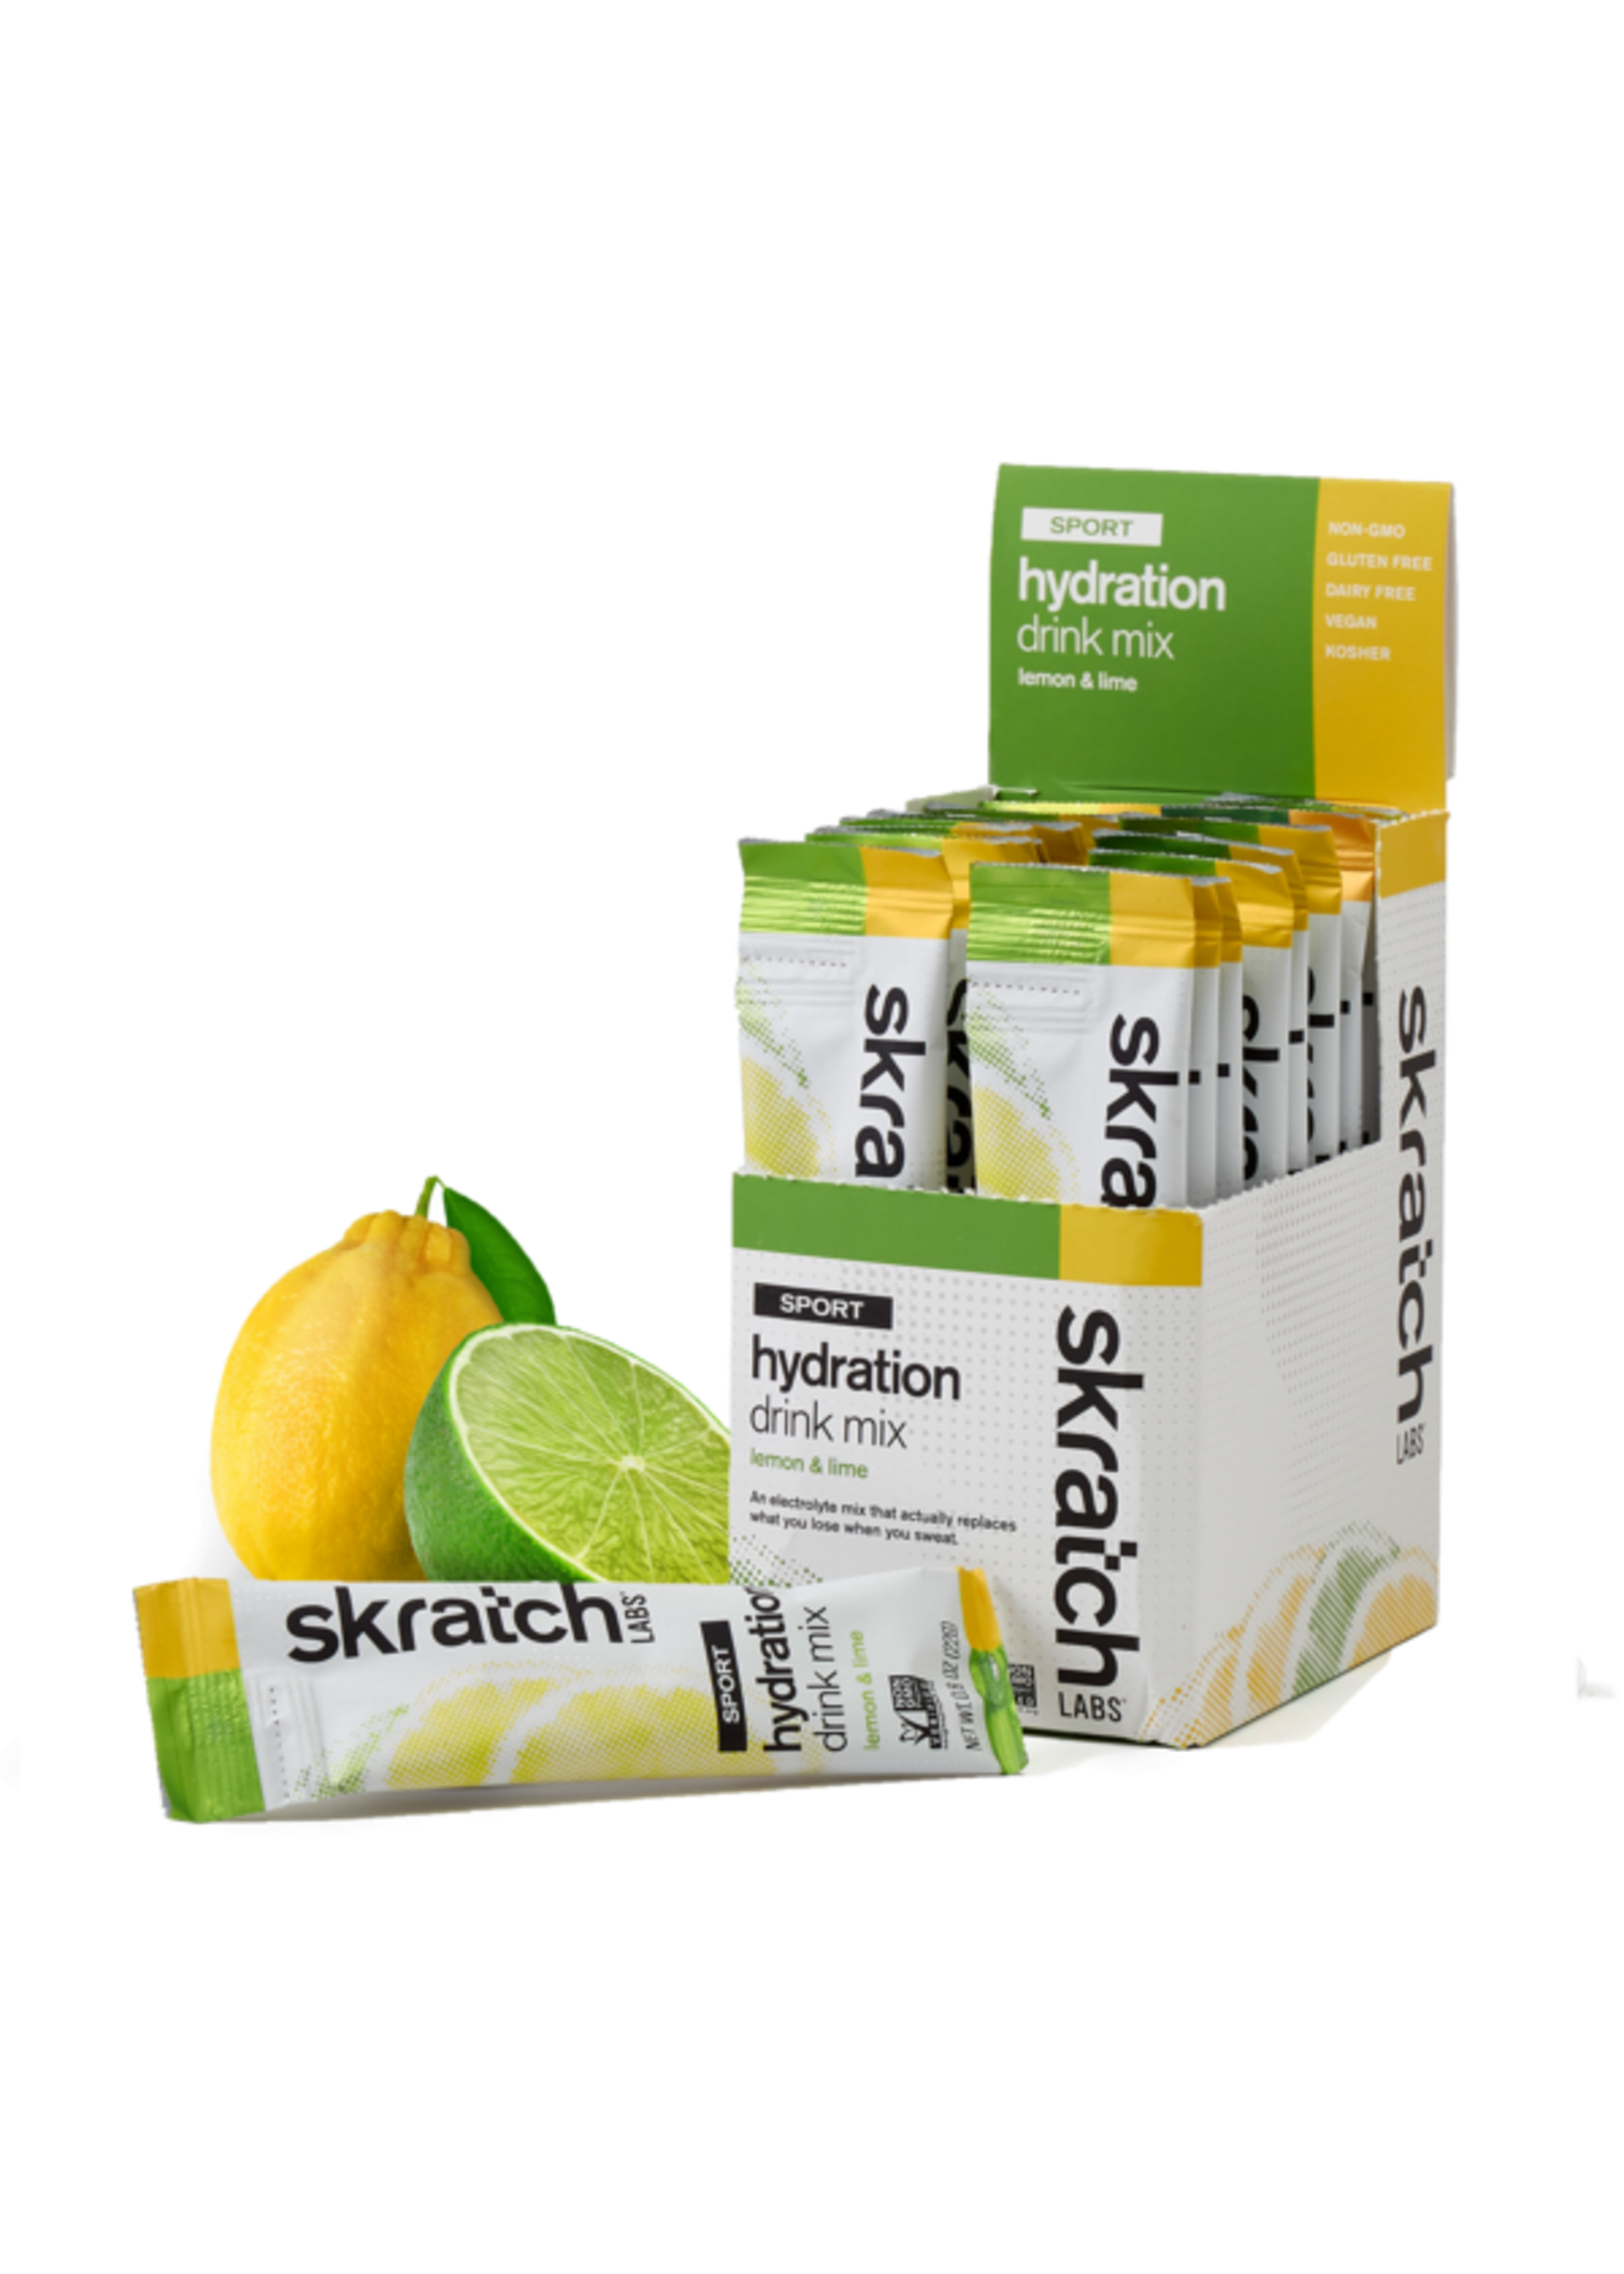 SKRATCH LABS Skratch Labs Sport Hydration Drink Mix - Lemon & Lime / Single Serving